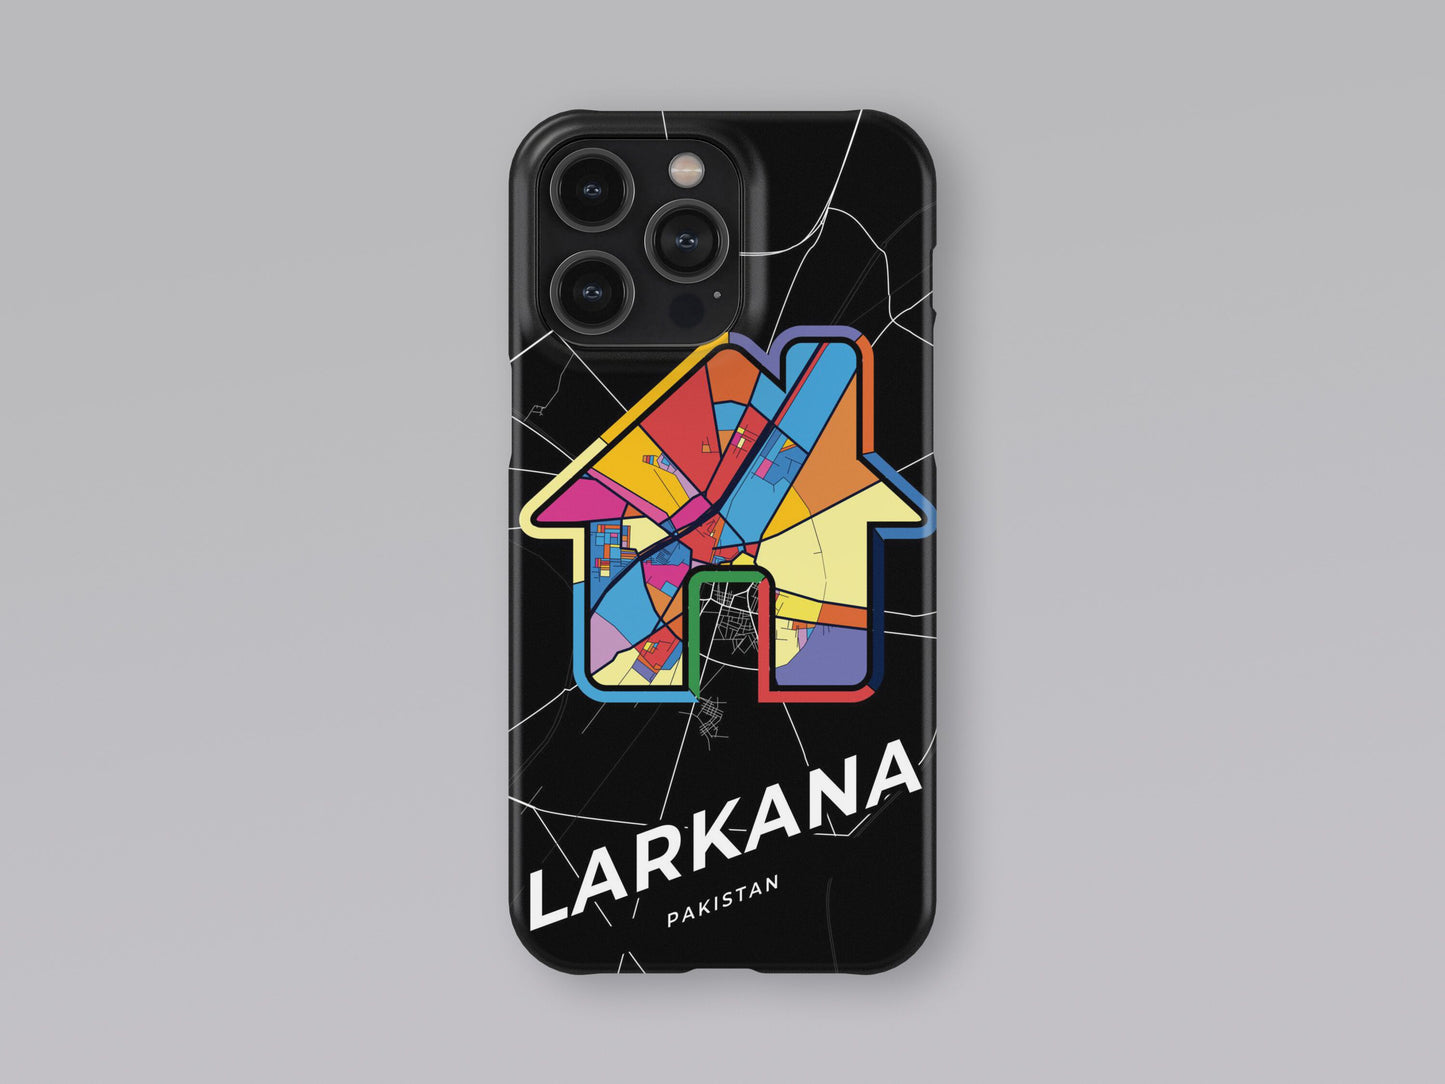 Larkana Pakistan slim phone case with colorful icon. Birthday, wedding or housewarming gift. Couple match cases. 3